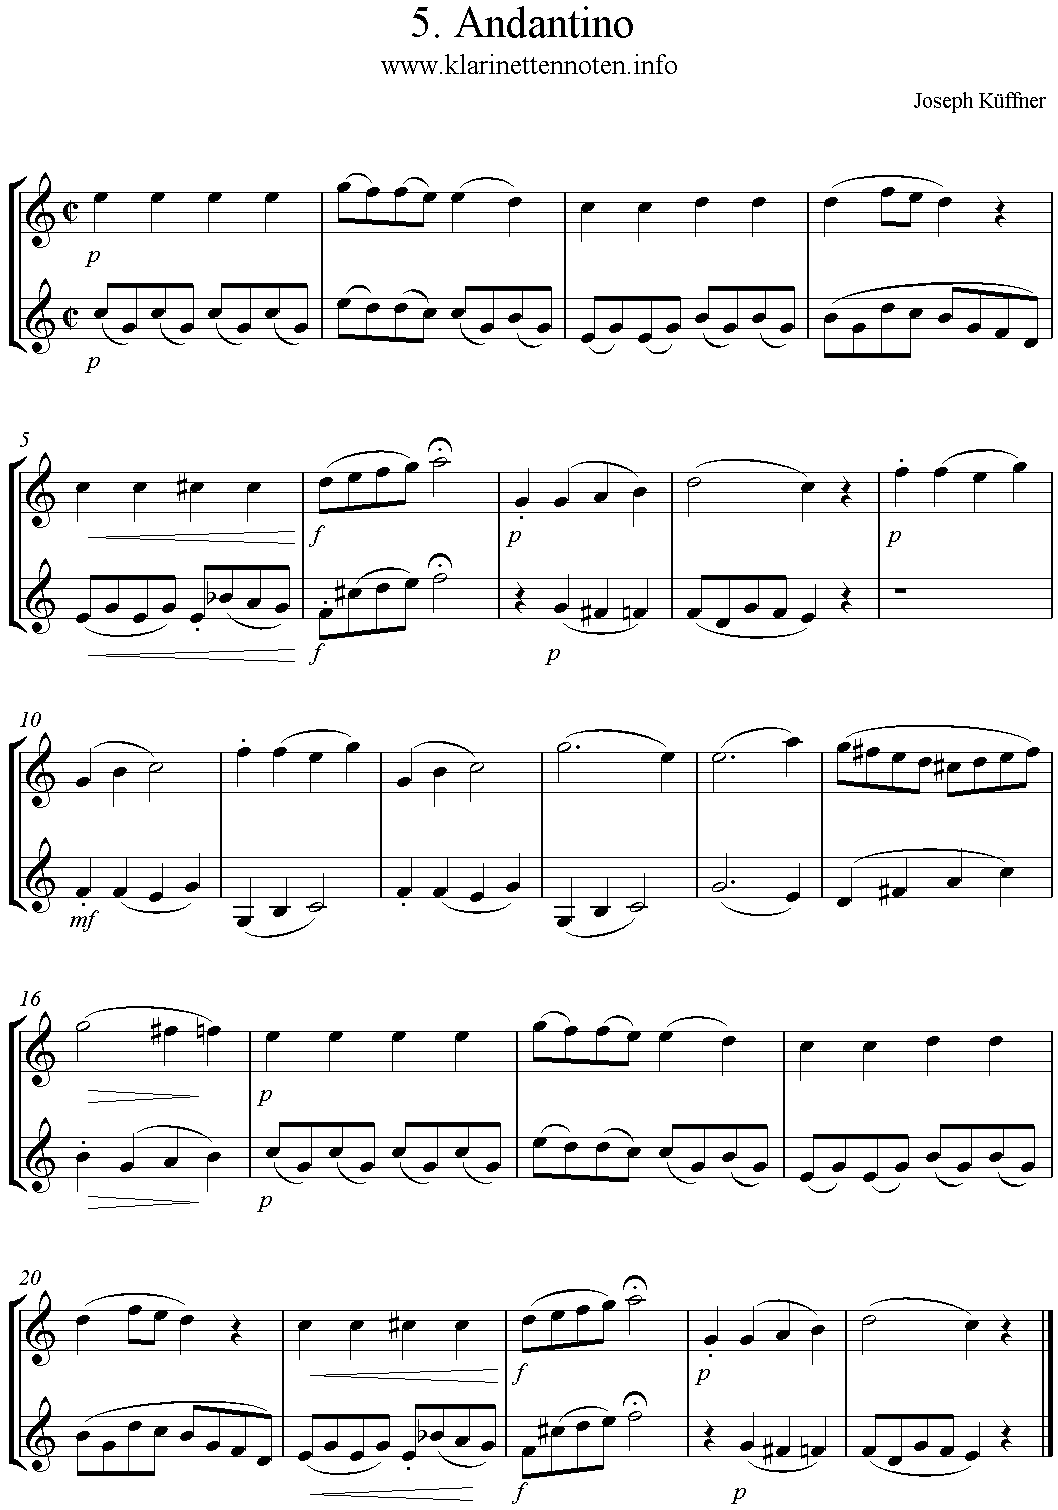 24 instruktive Duette- Joseph Küffner -05 Andantino